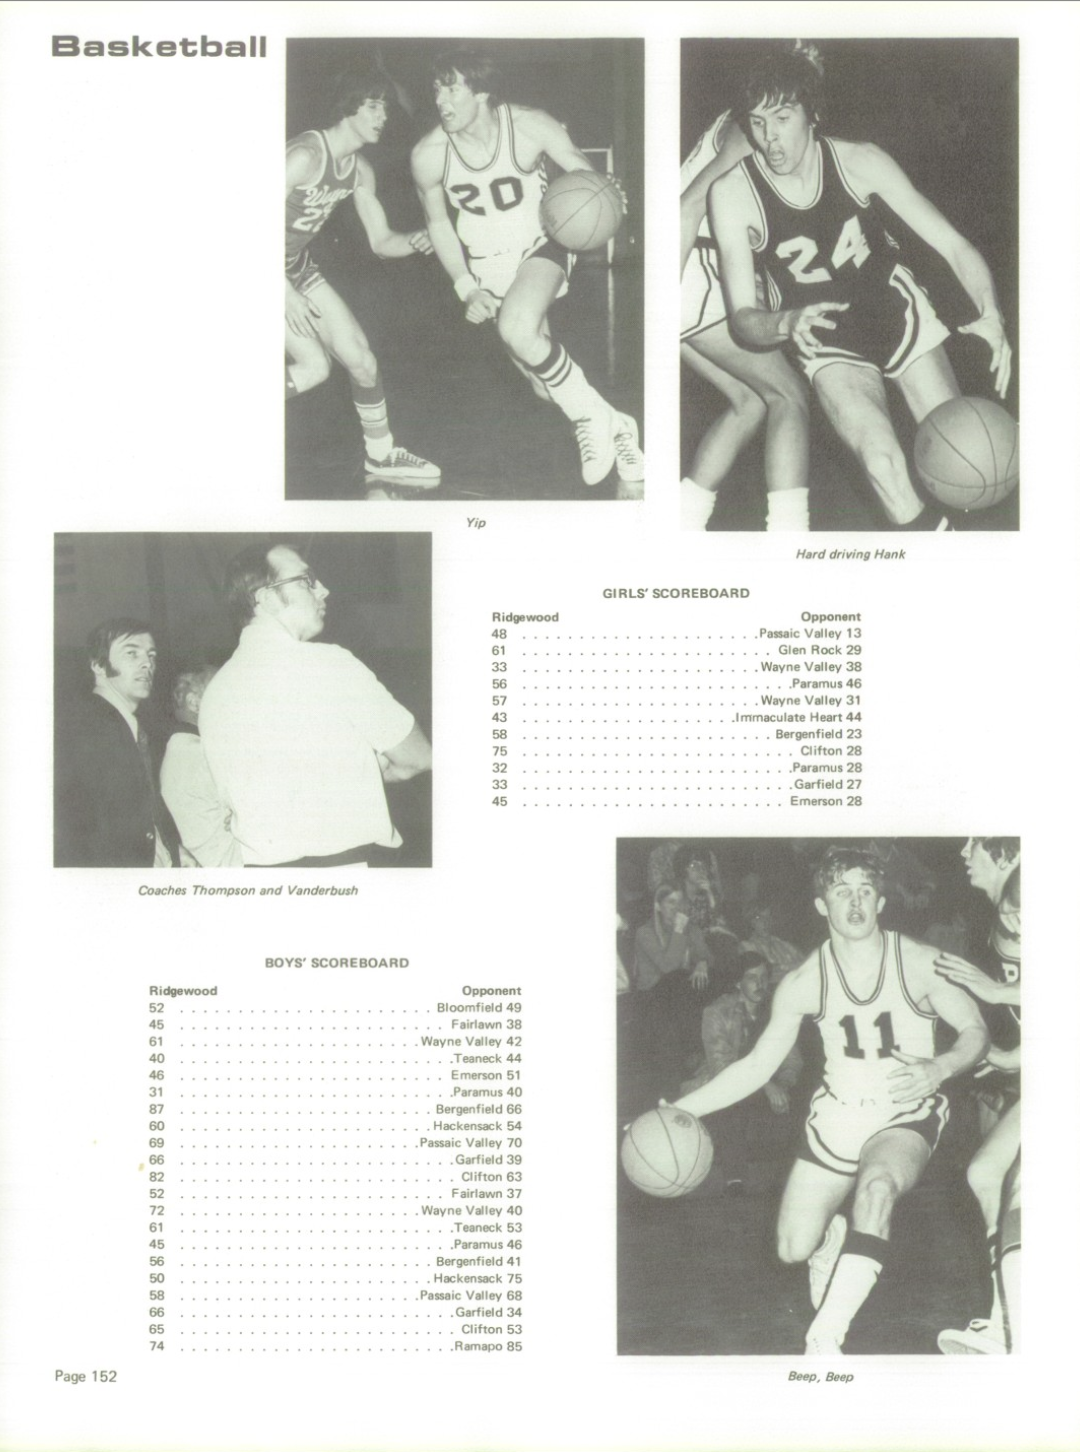 1973 Boys’ Basketball Team